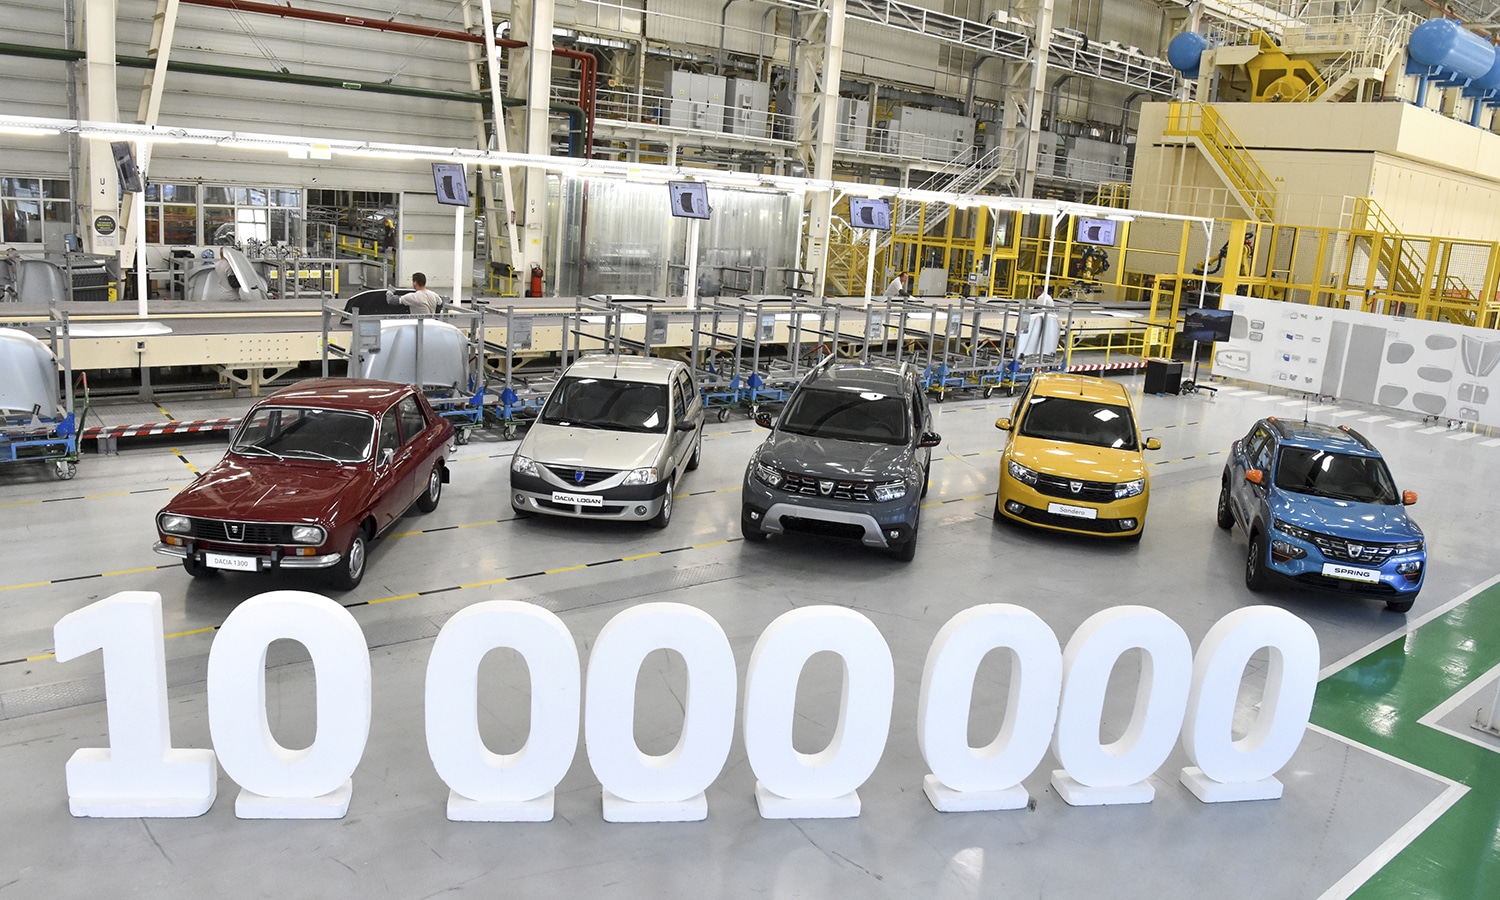 Dacia 10 million units